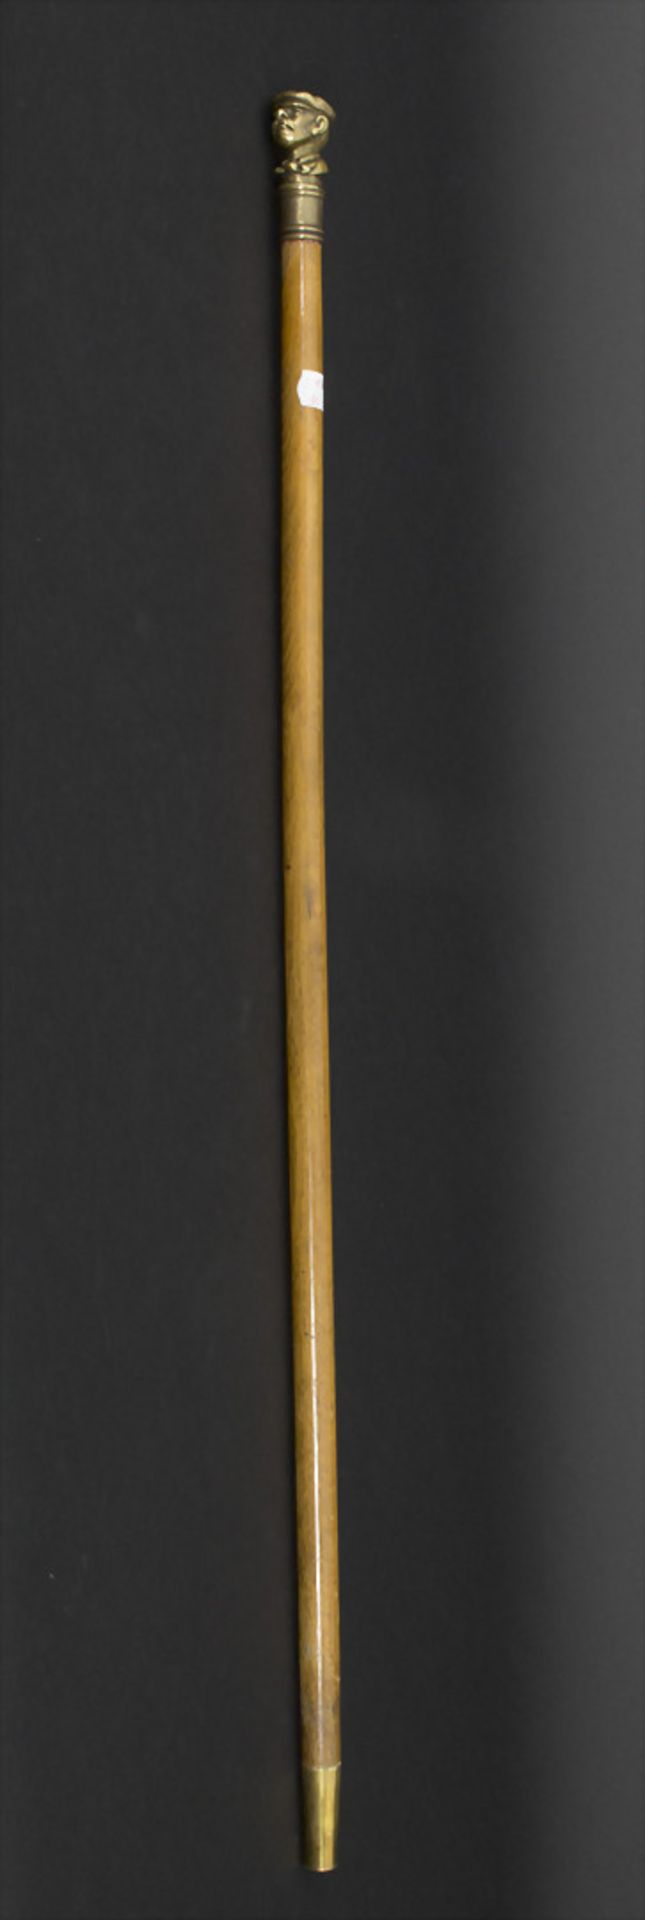 Gehstock mit Figurengriff 'Männerkopf' / A cane with figural handle 'Head of a man', um - Bild 5 aus 5